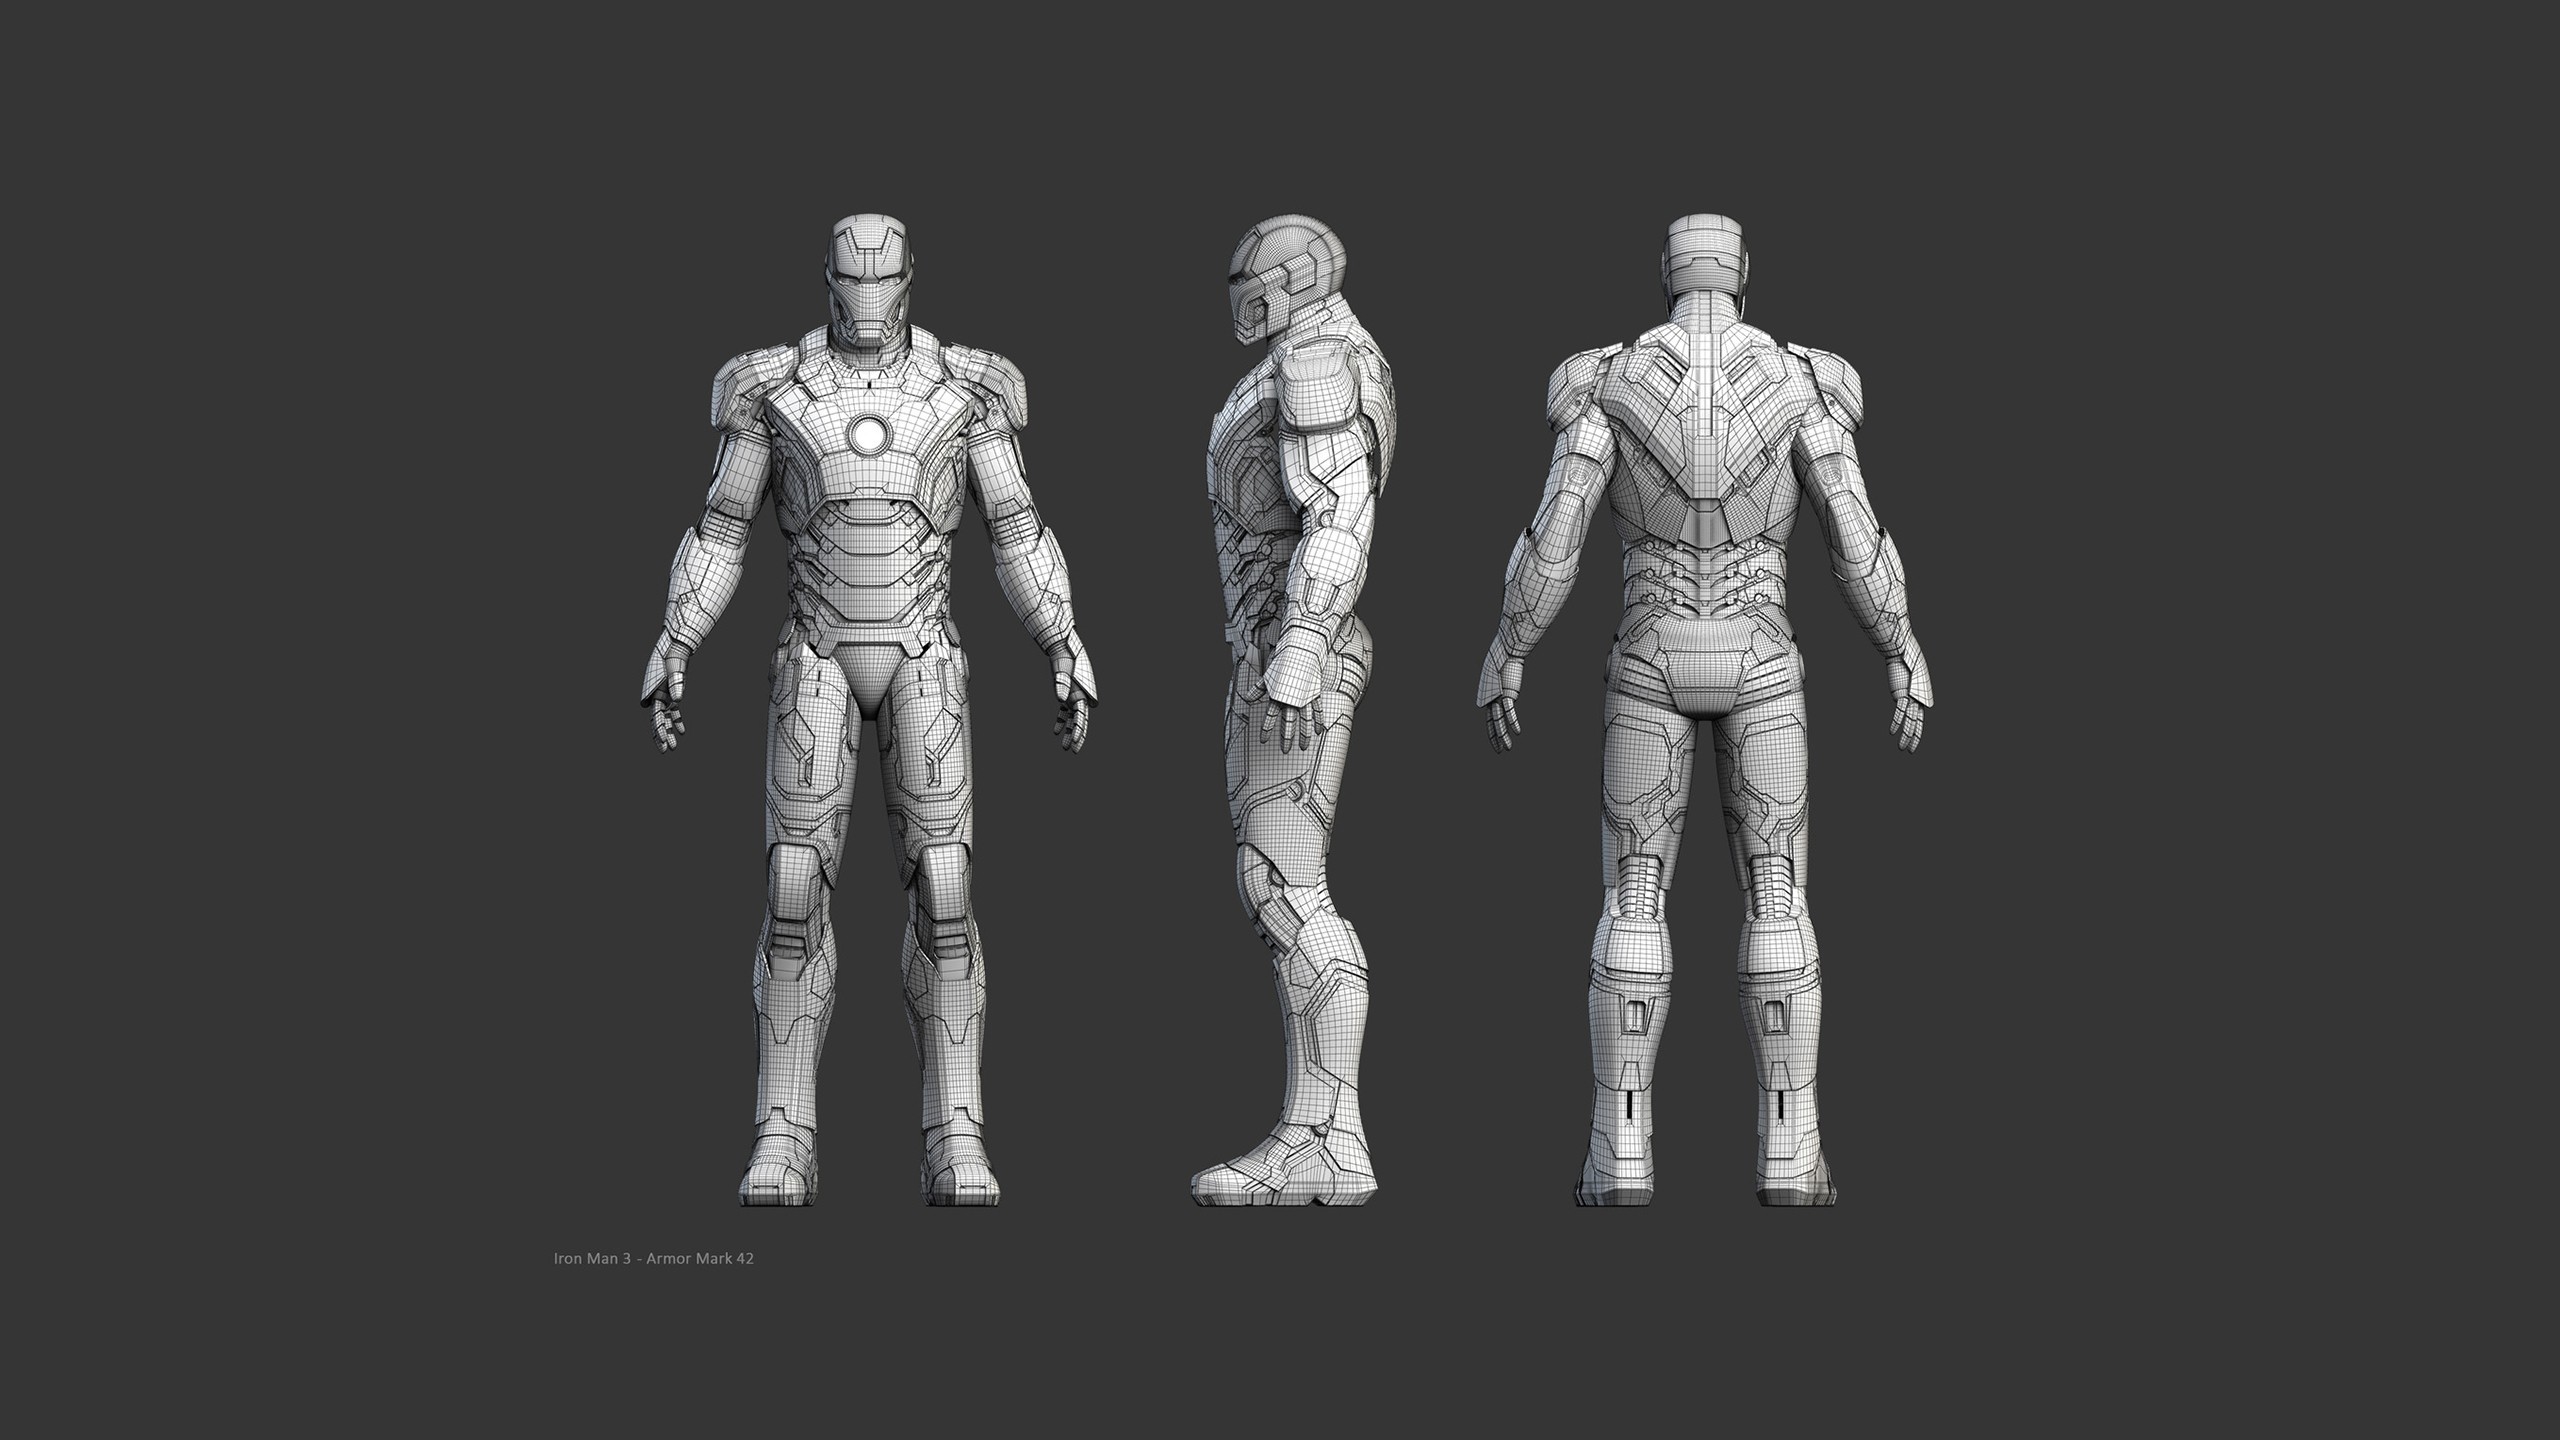 General 2560x1440 Iron Man Marvel Cinematic Universe simple background Iron Man 3 monochrome gray background